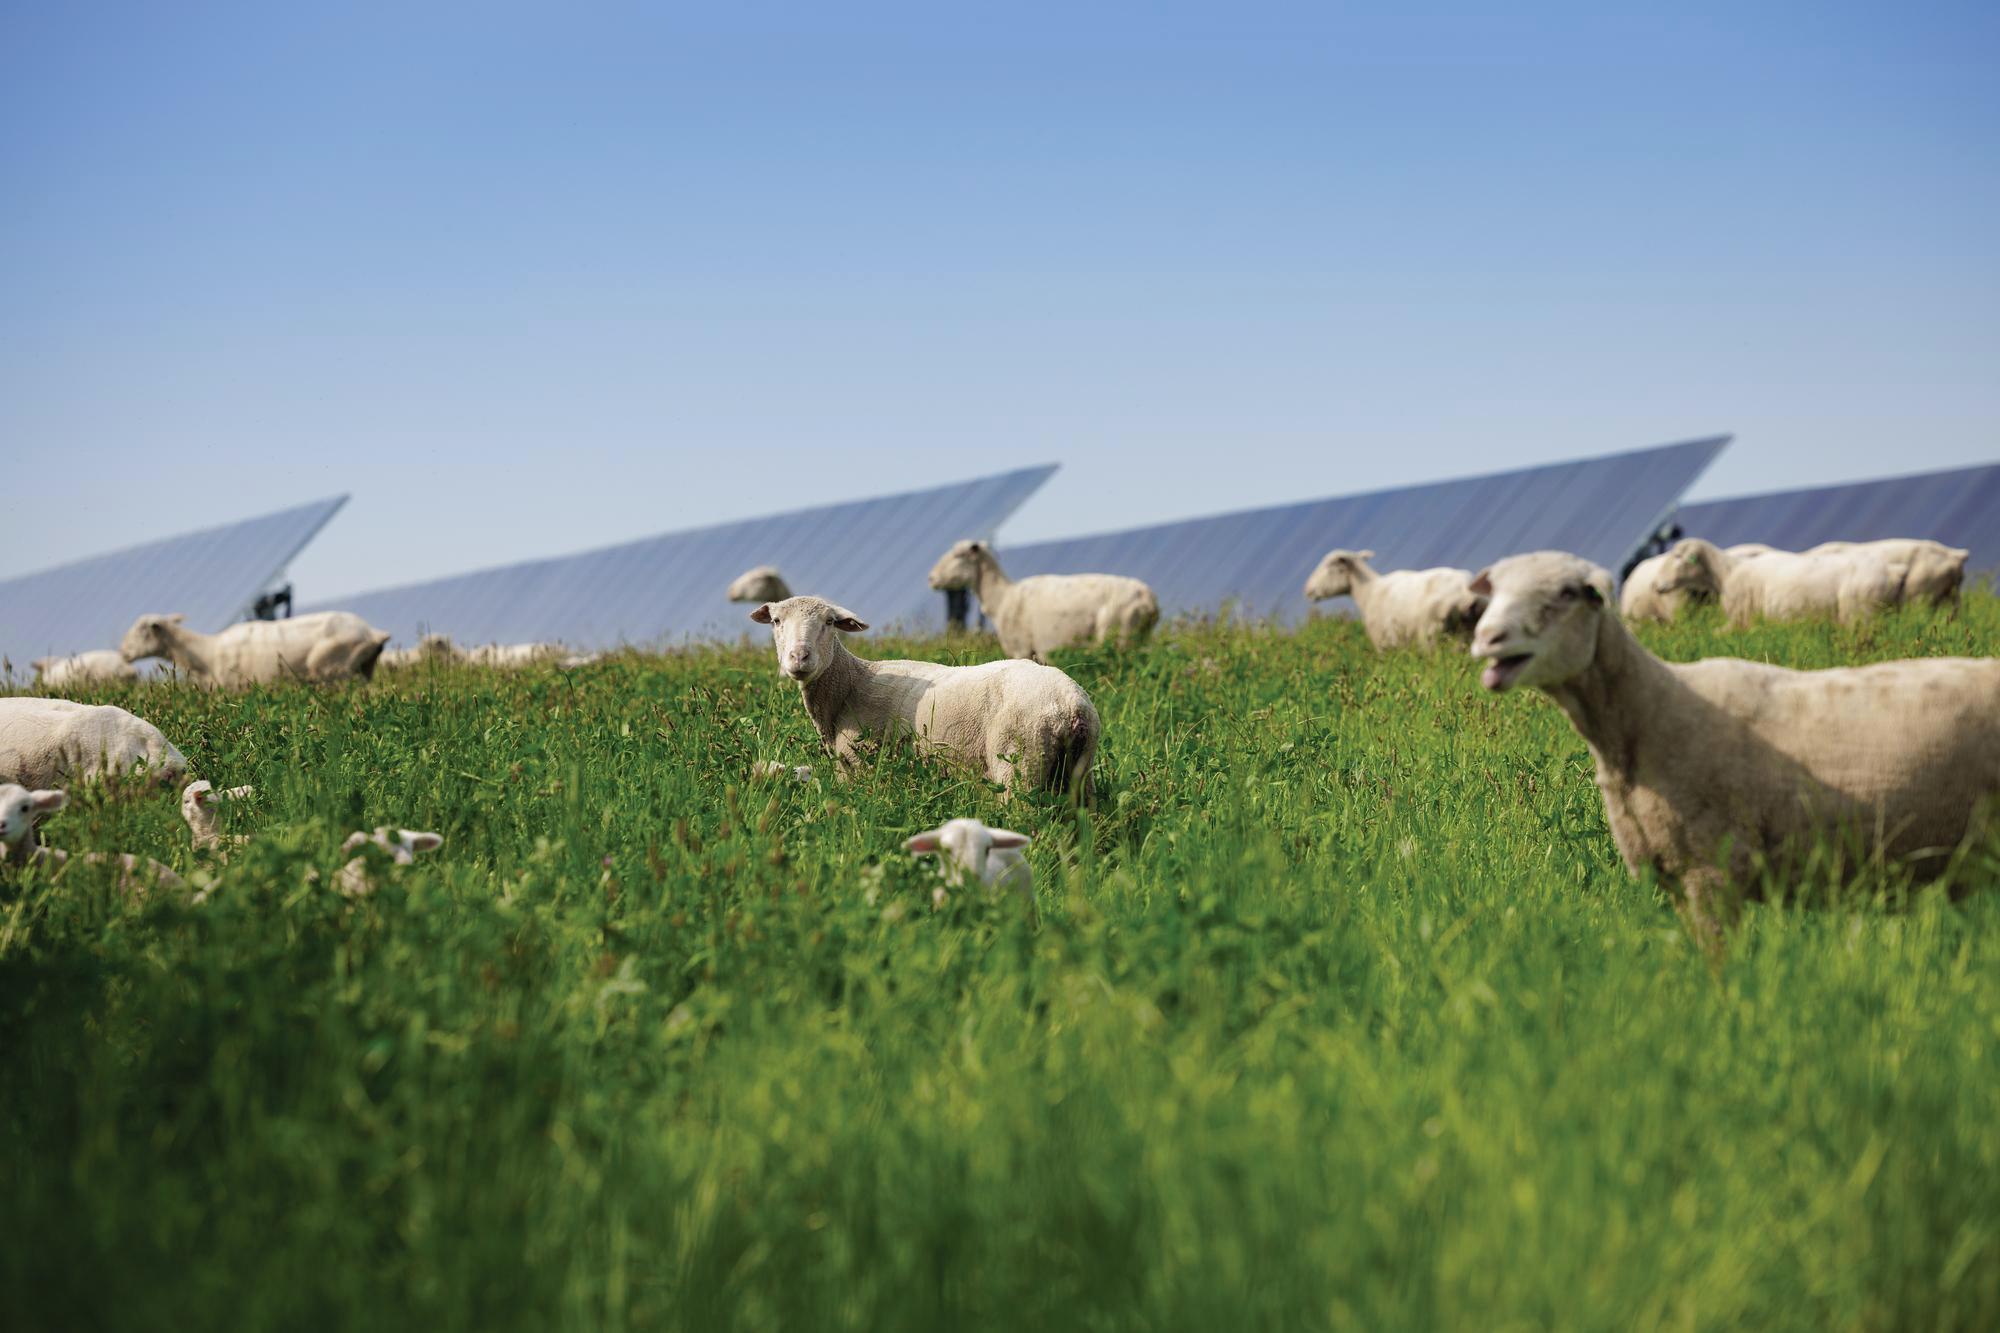 sheep grazing amongst solar panels